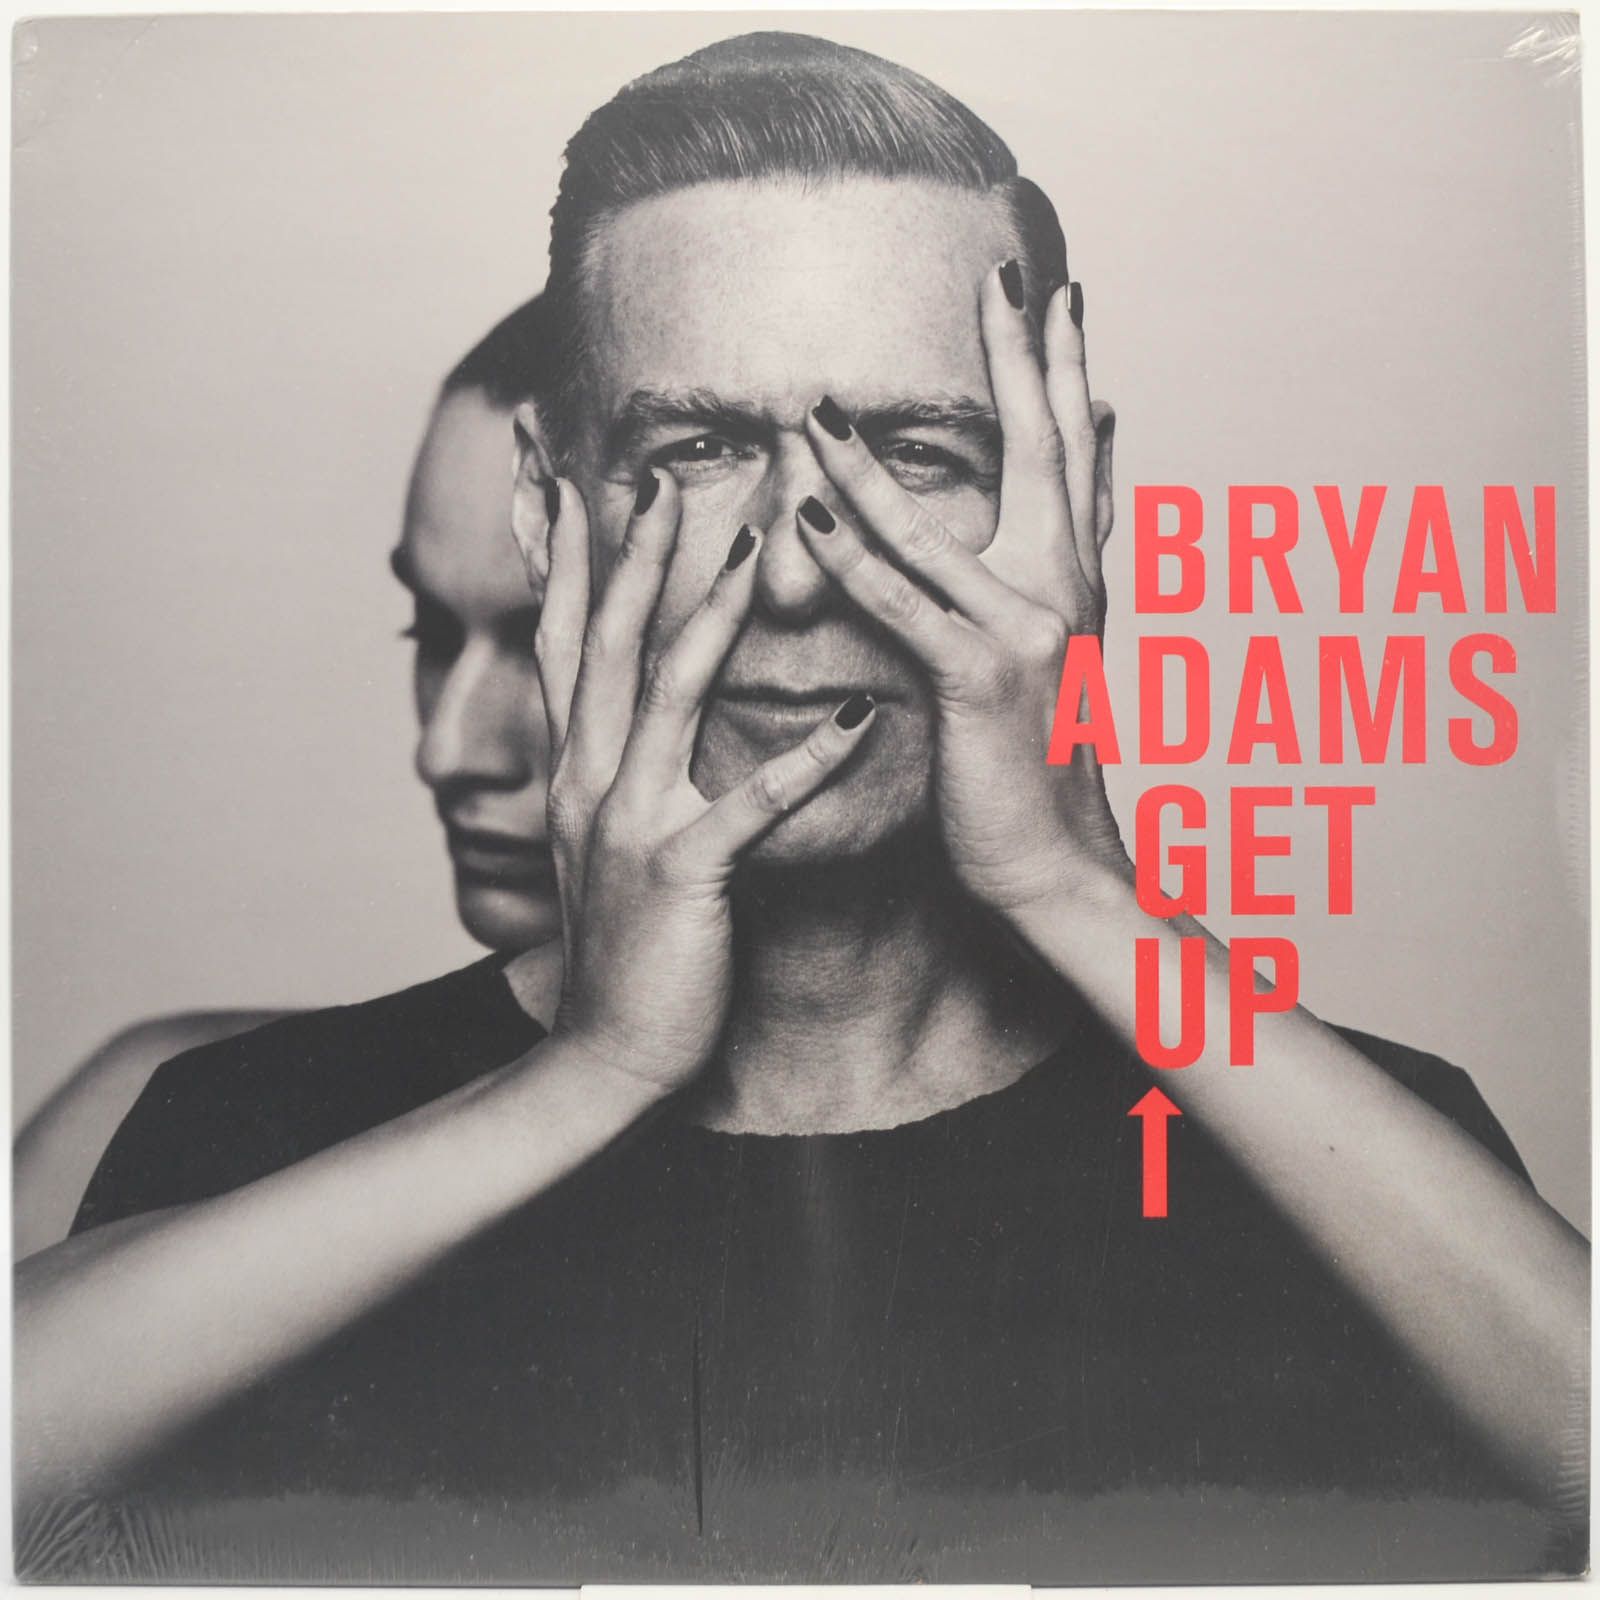 Bryan Adams — Get Up, 2015